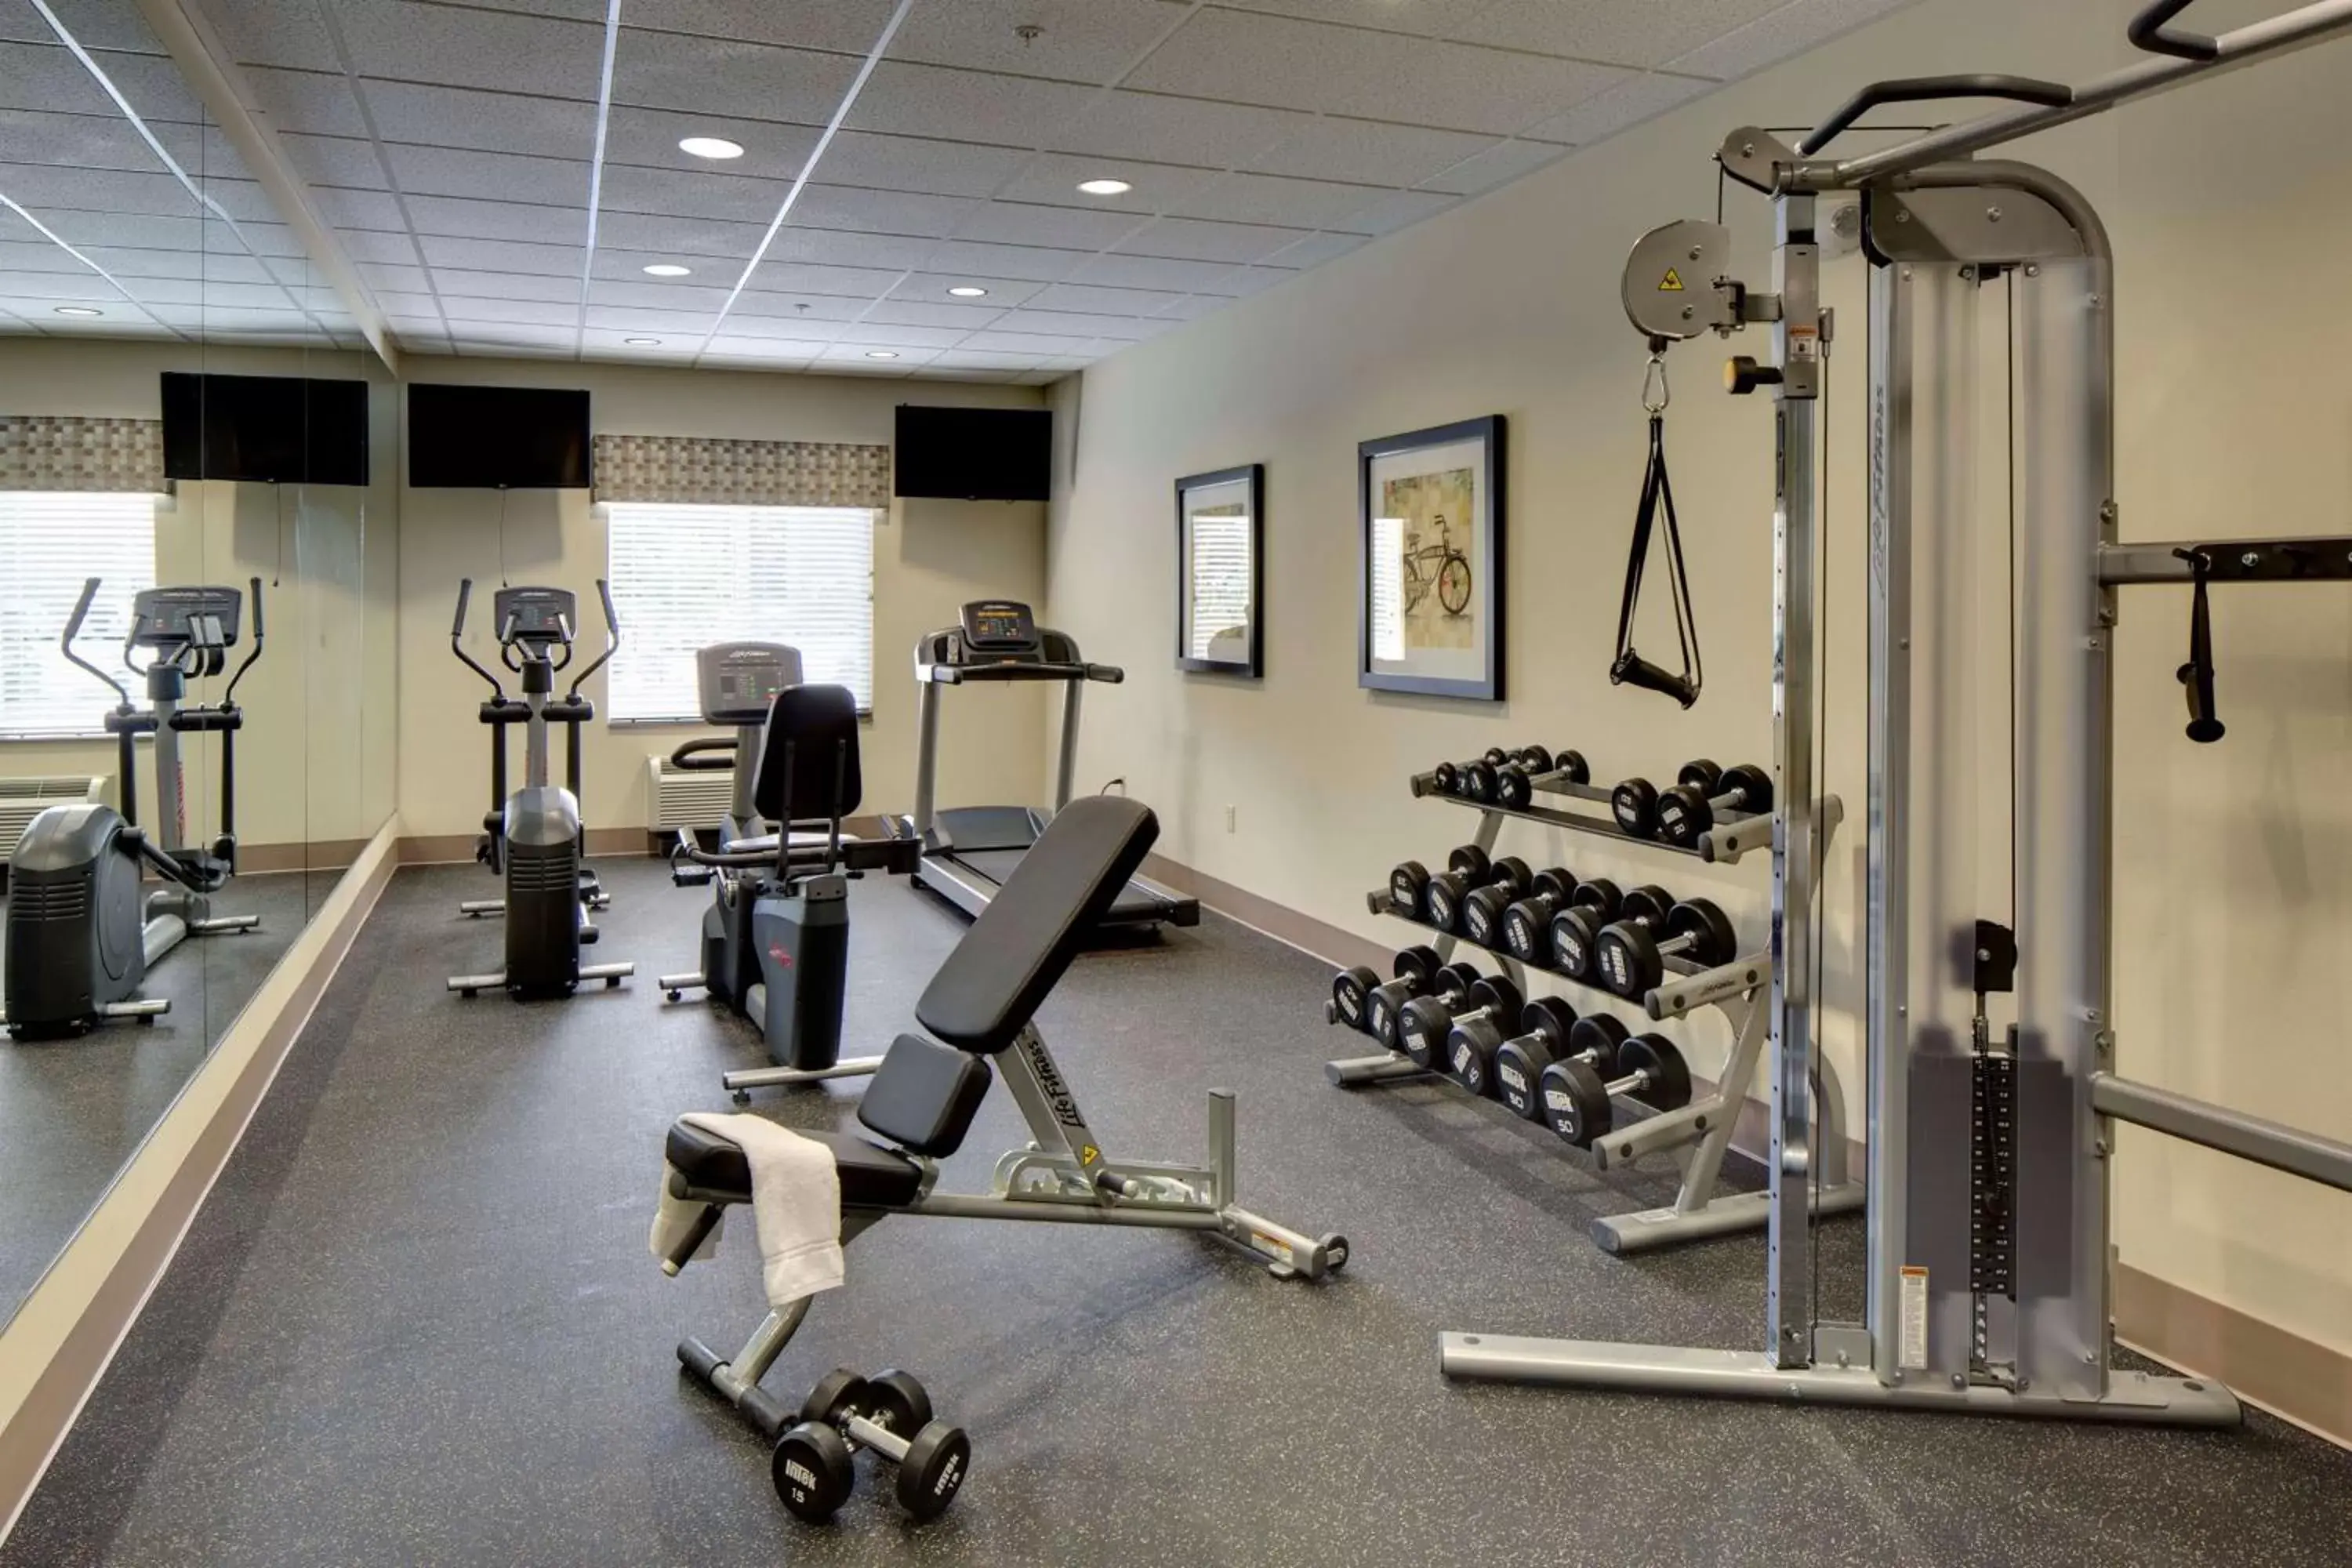 Fitness centre/facilities, Fitness Center/Facilities in Best Western Plus Arlington/Marysville